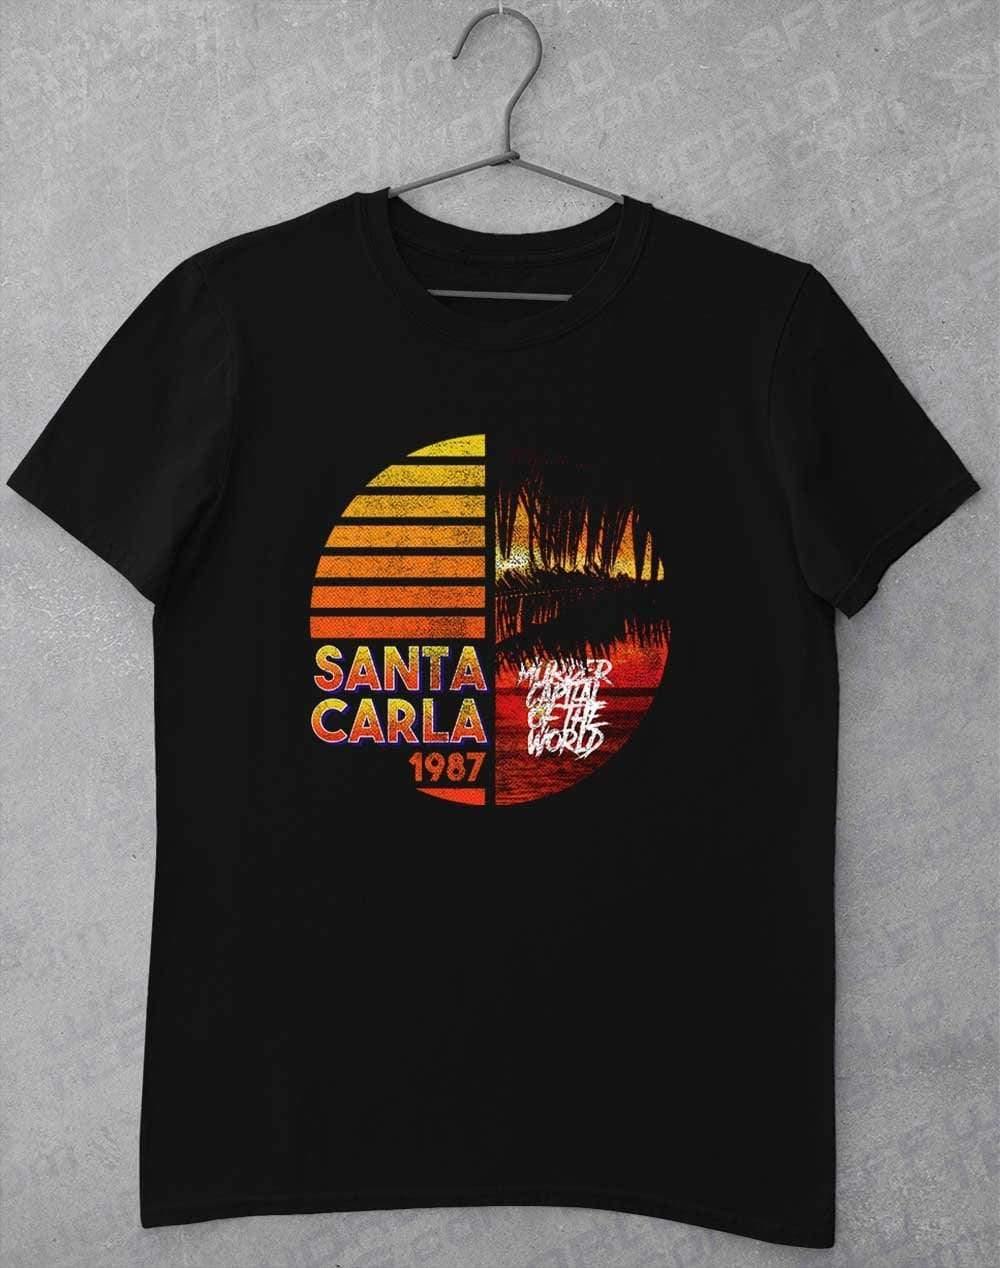 Santa Carla 1987 - T-Shirt S / Black  - Off World Tees